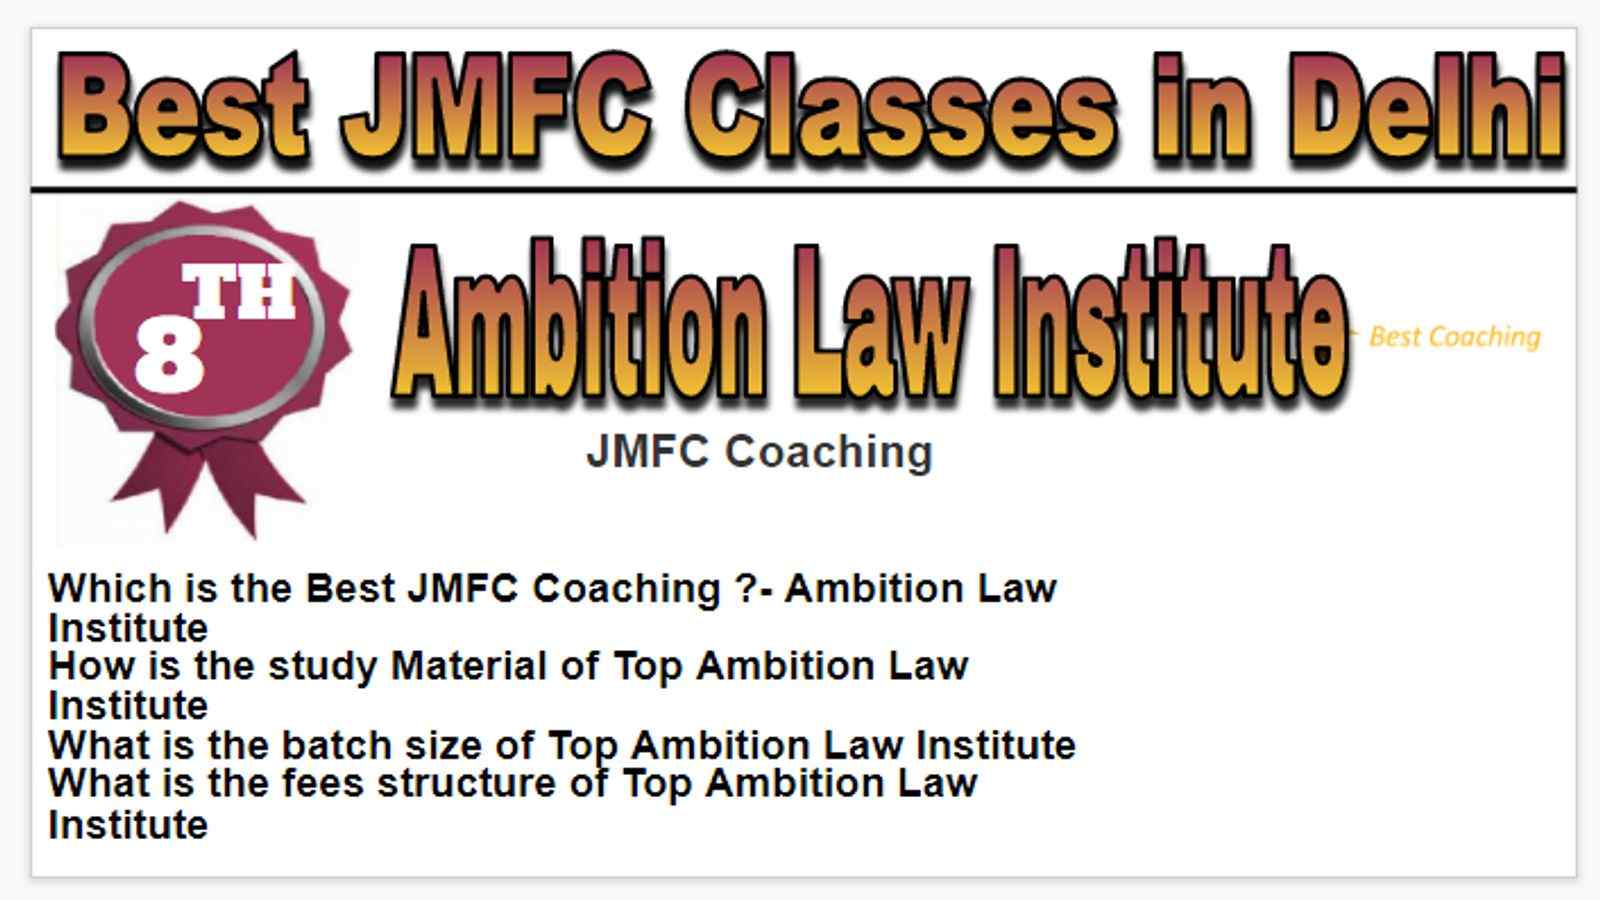 Rank 8 Best JMFC Classes in Delhi